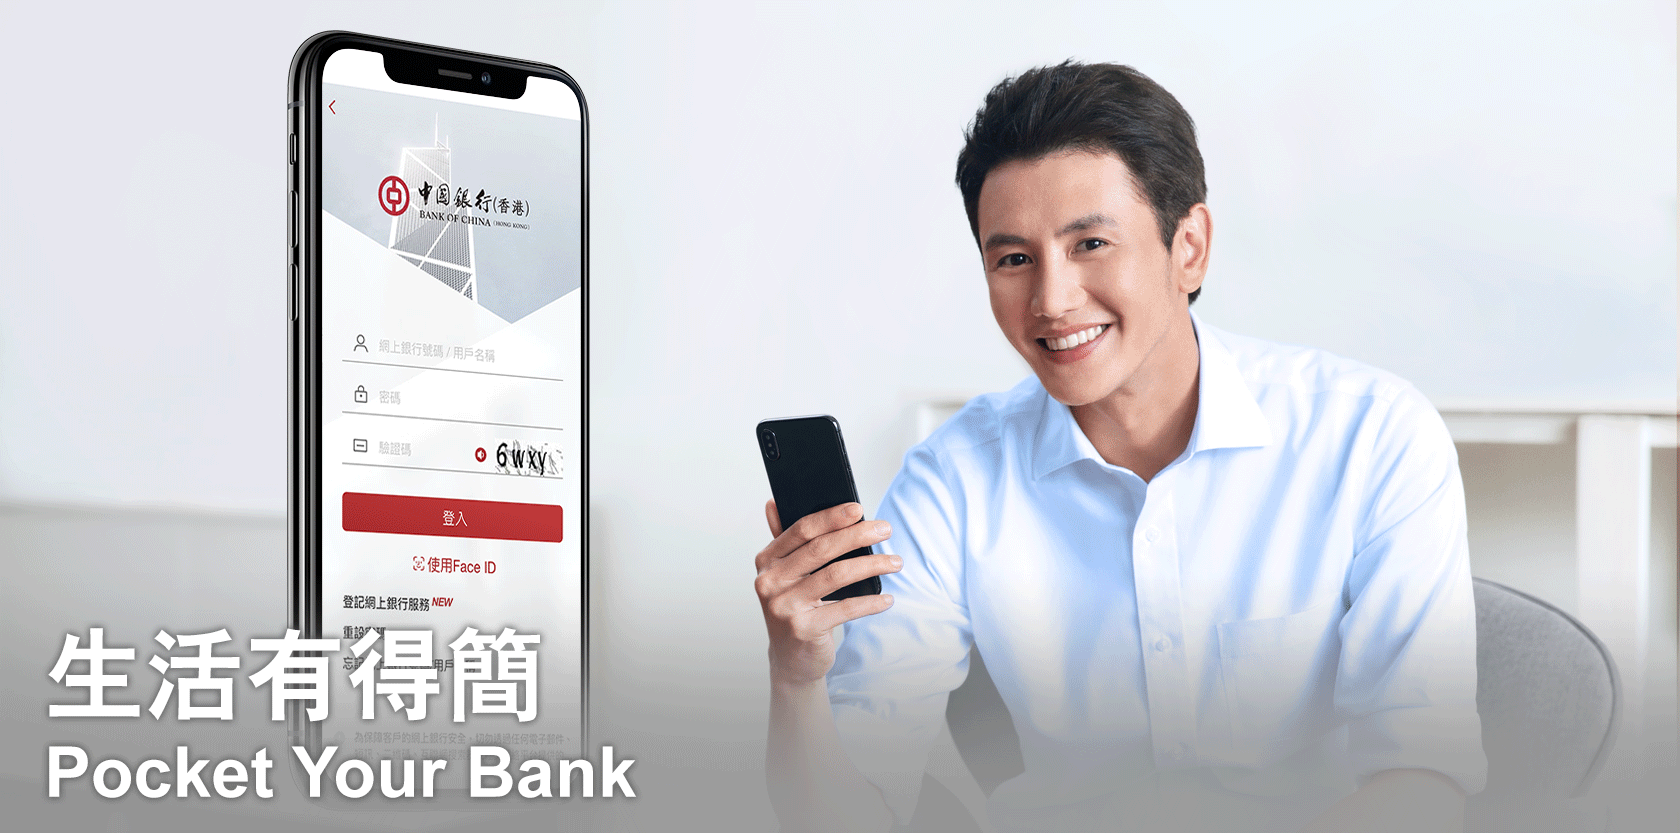 生活有得簡 Pocket Your Bank
簡單三步，啟動手機銀行服務